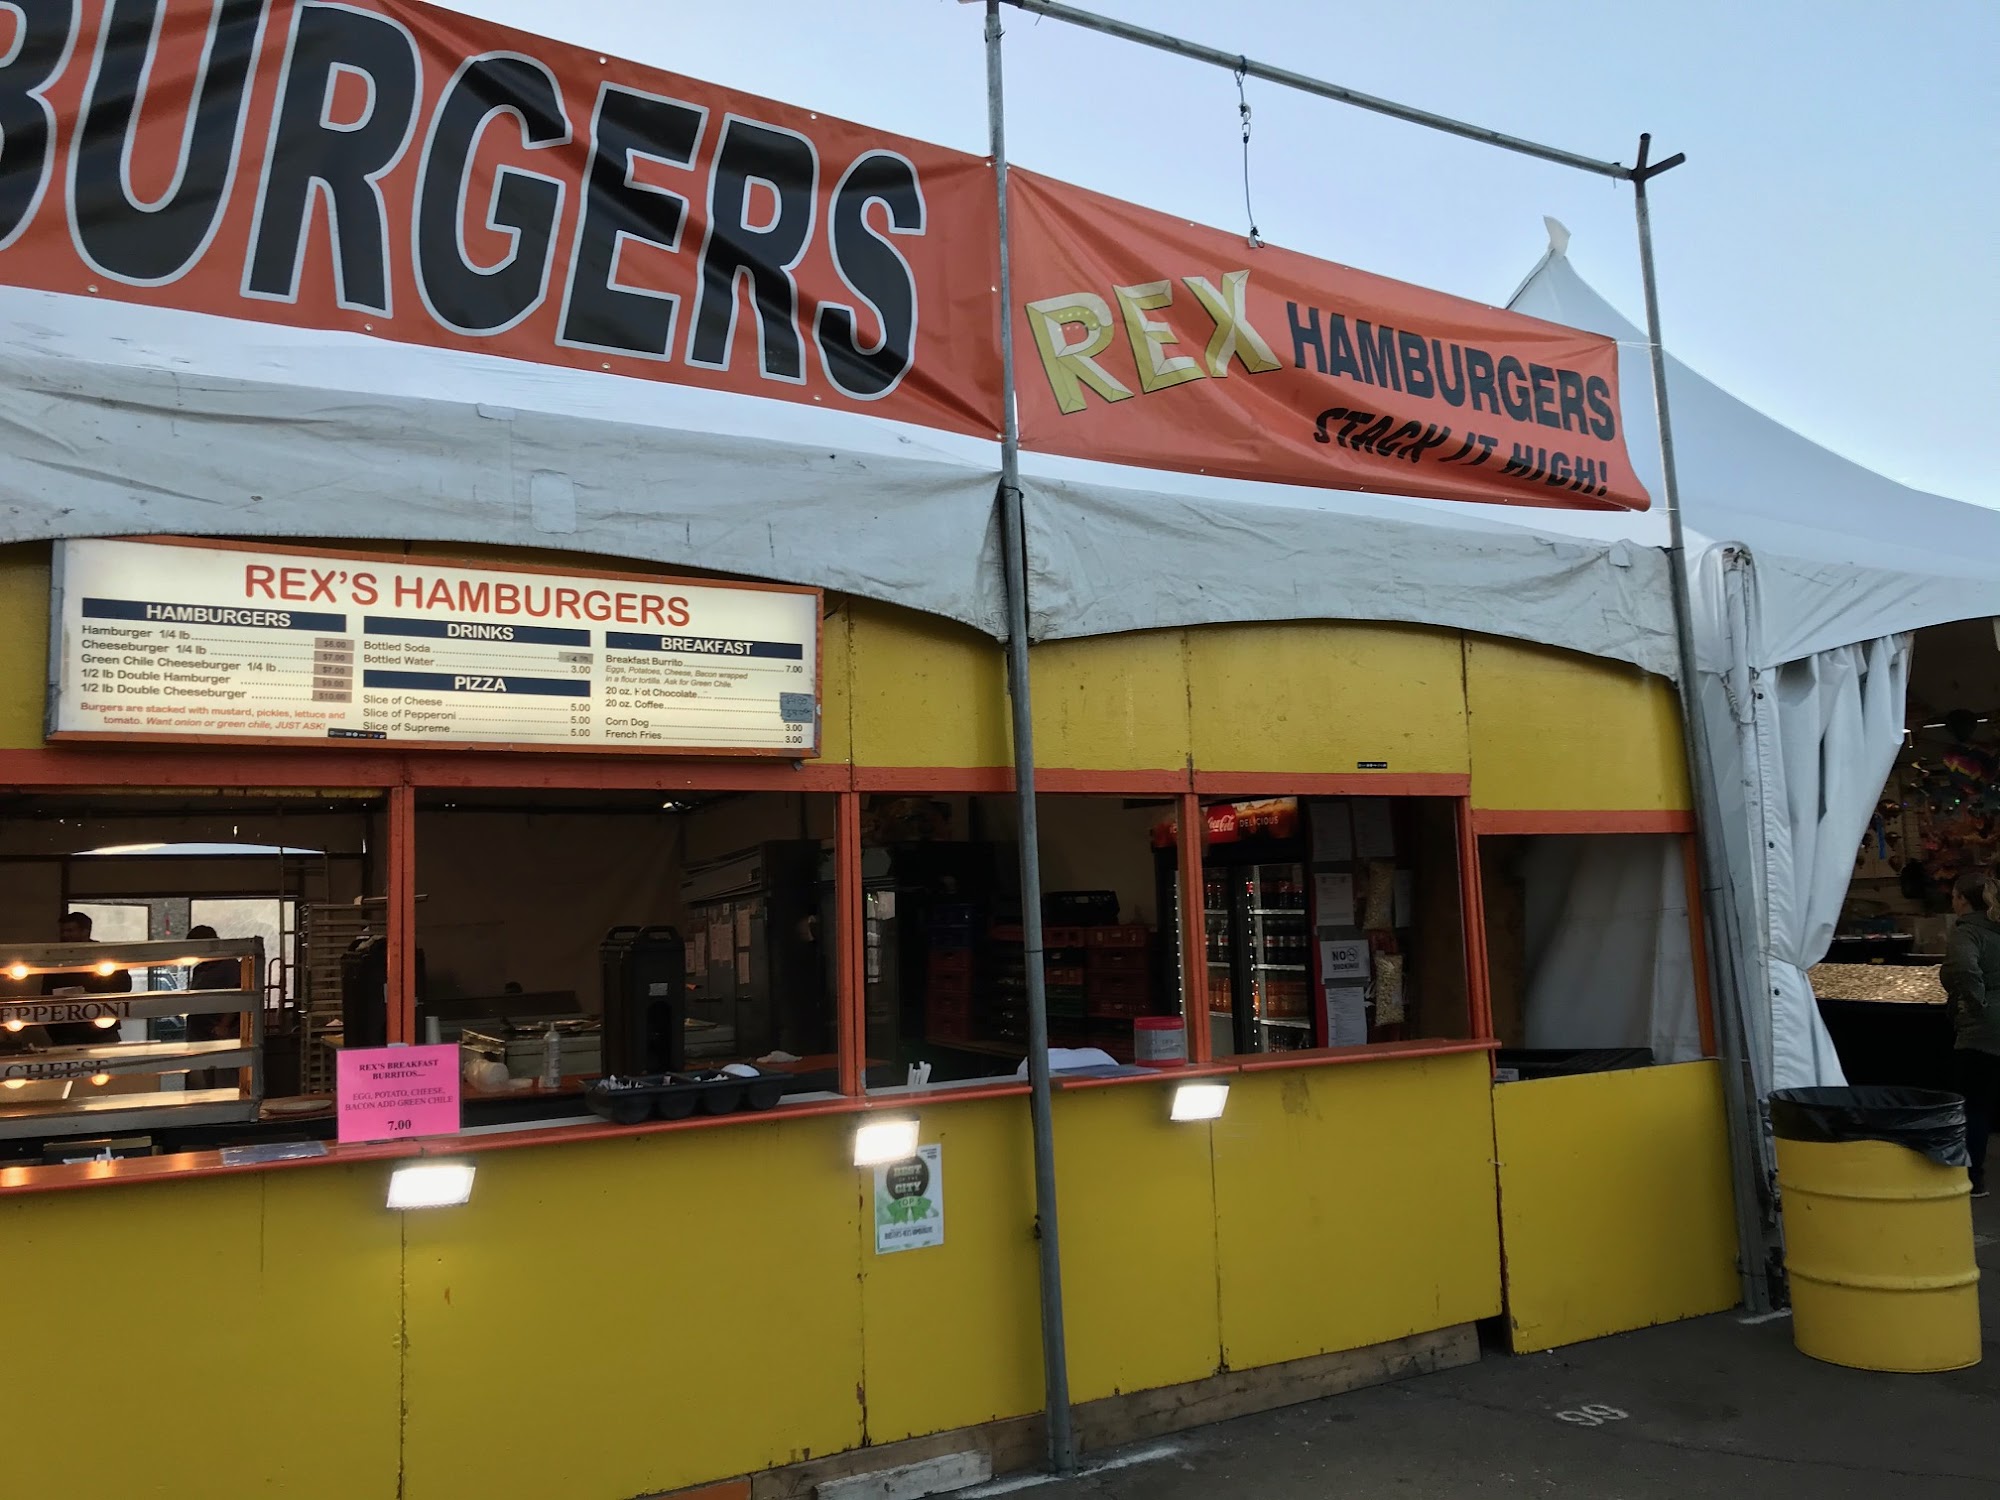 Rex's Hamburgers (The Rex)